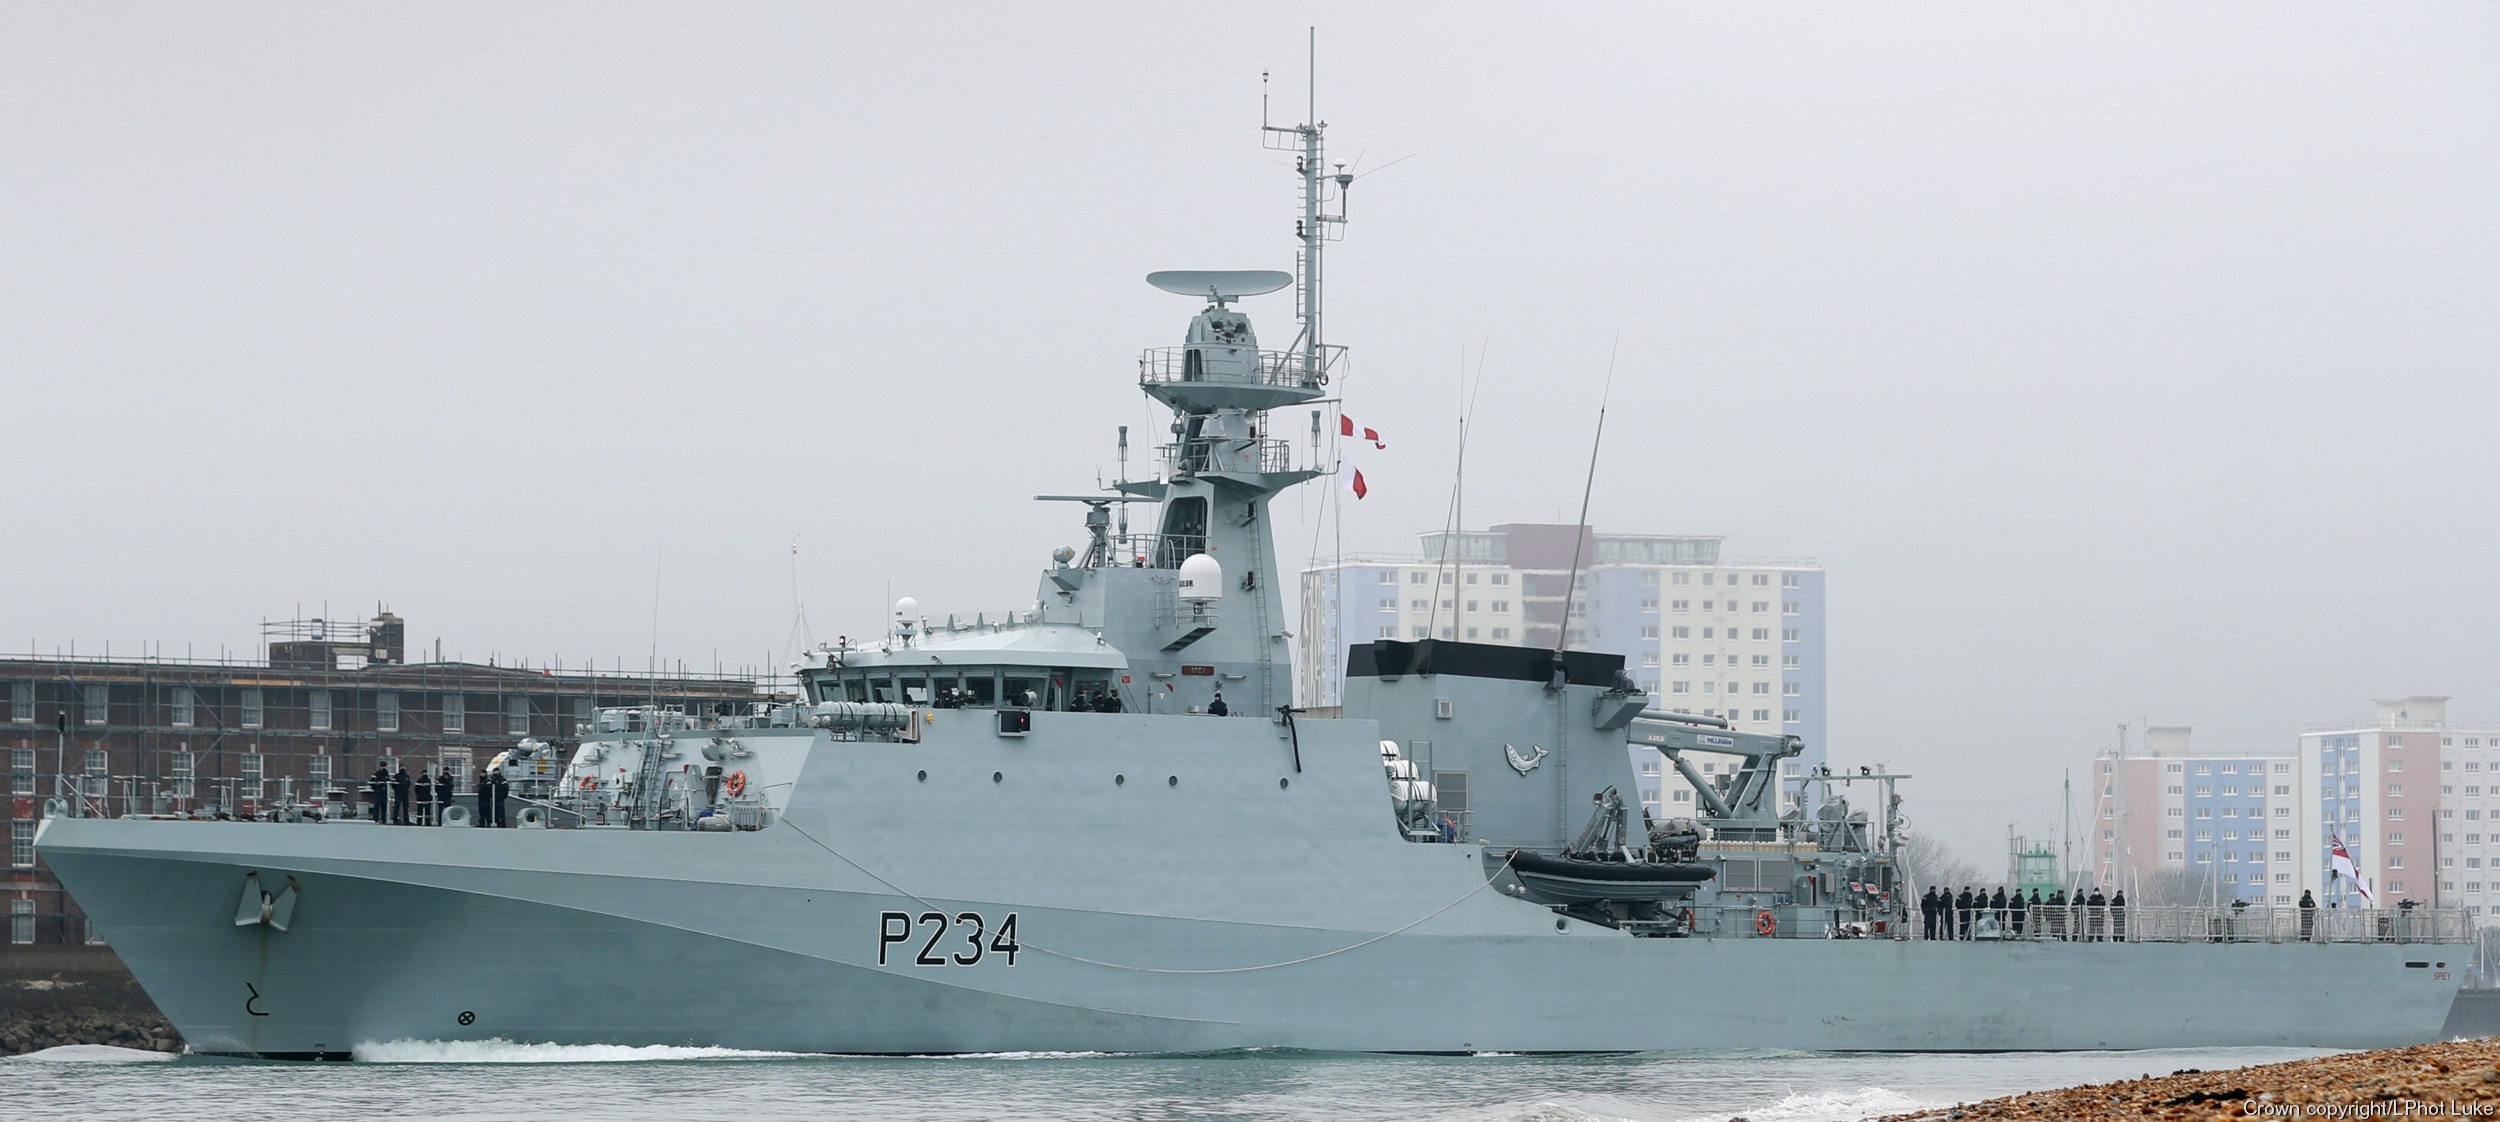 p234 hms spey river class offshore patrol vessel opv royal navy 14